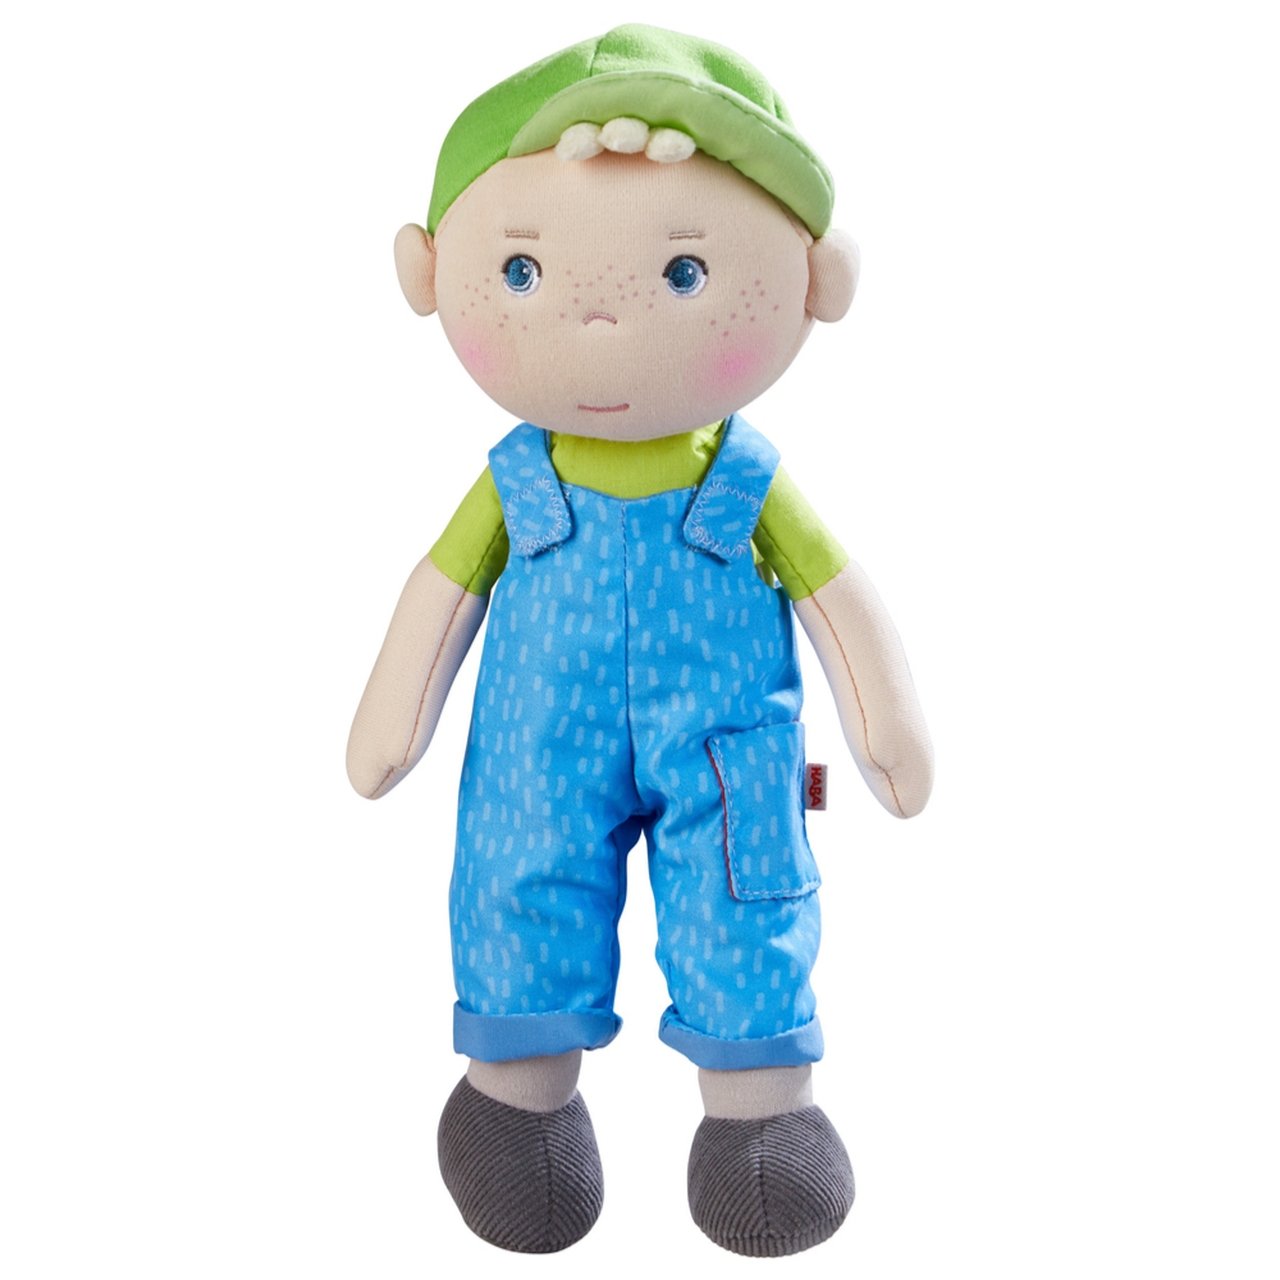 Haba Haba Soft Baby Doll "Till" - blueottertoys-HB305042